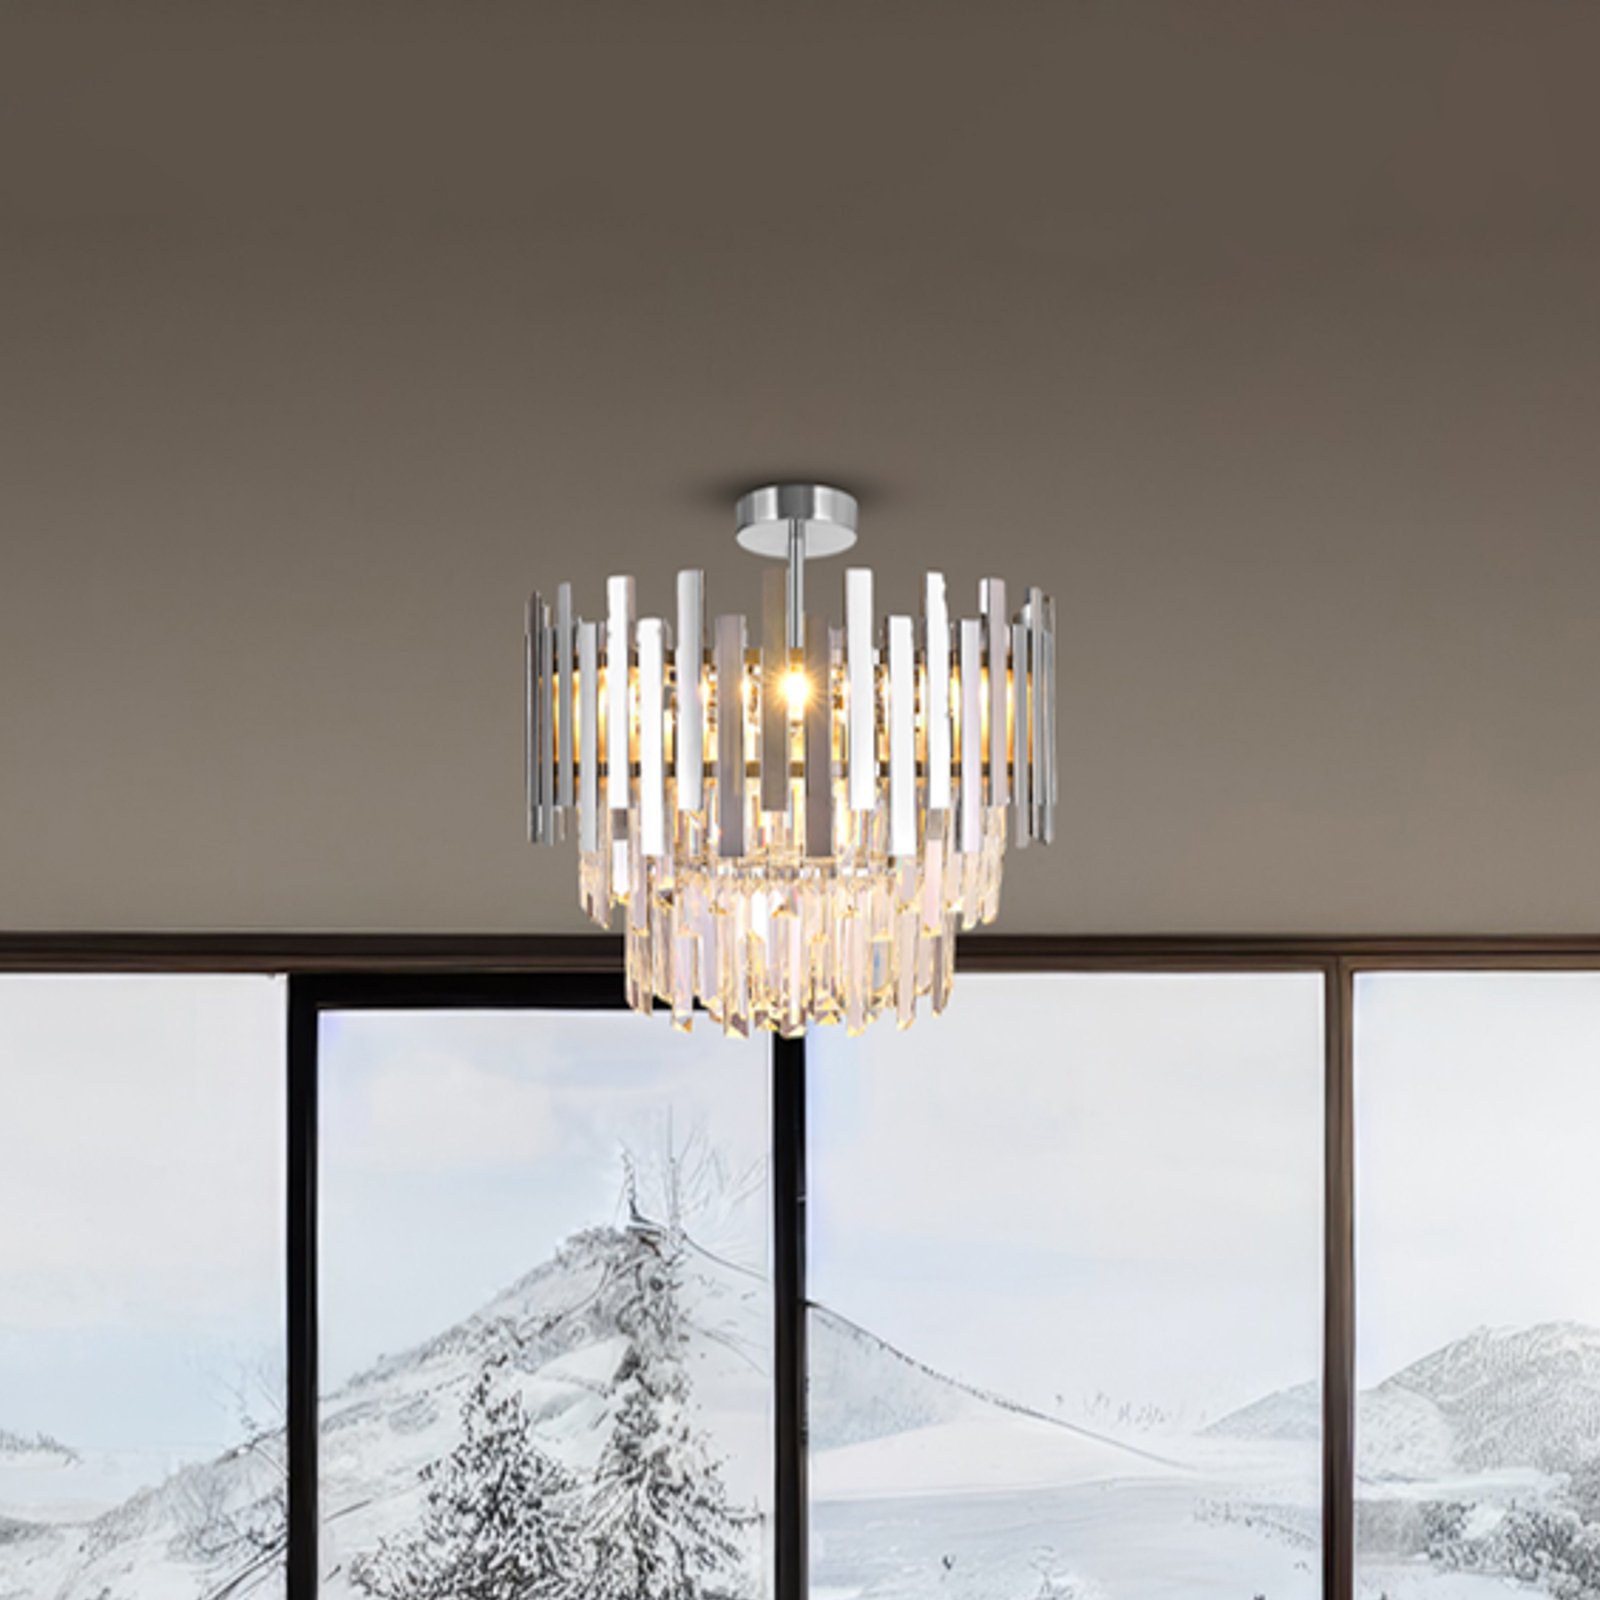 Plafondlamp Aspen metaal chroomkleurig, glazen kristallen, Ø 45 cm